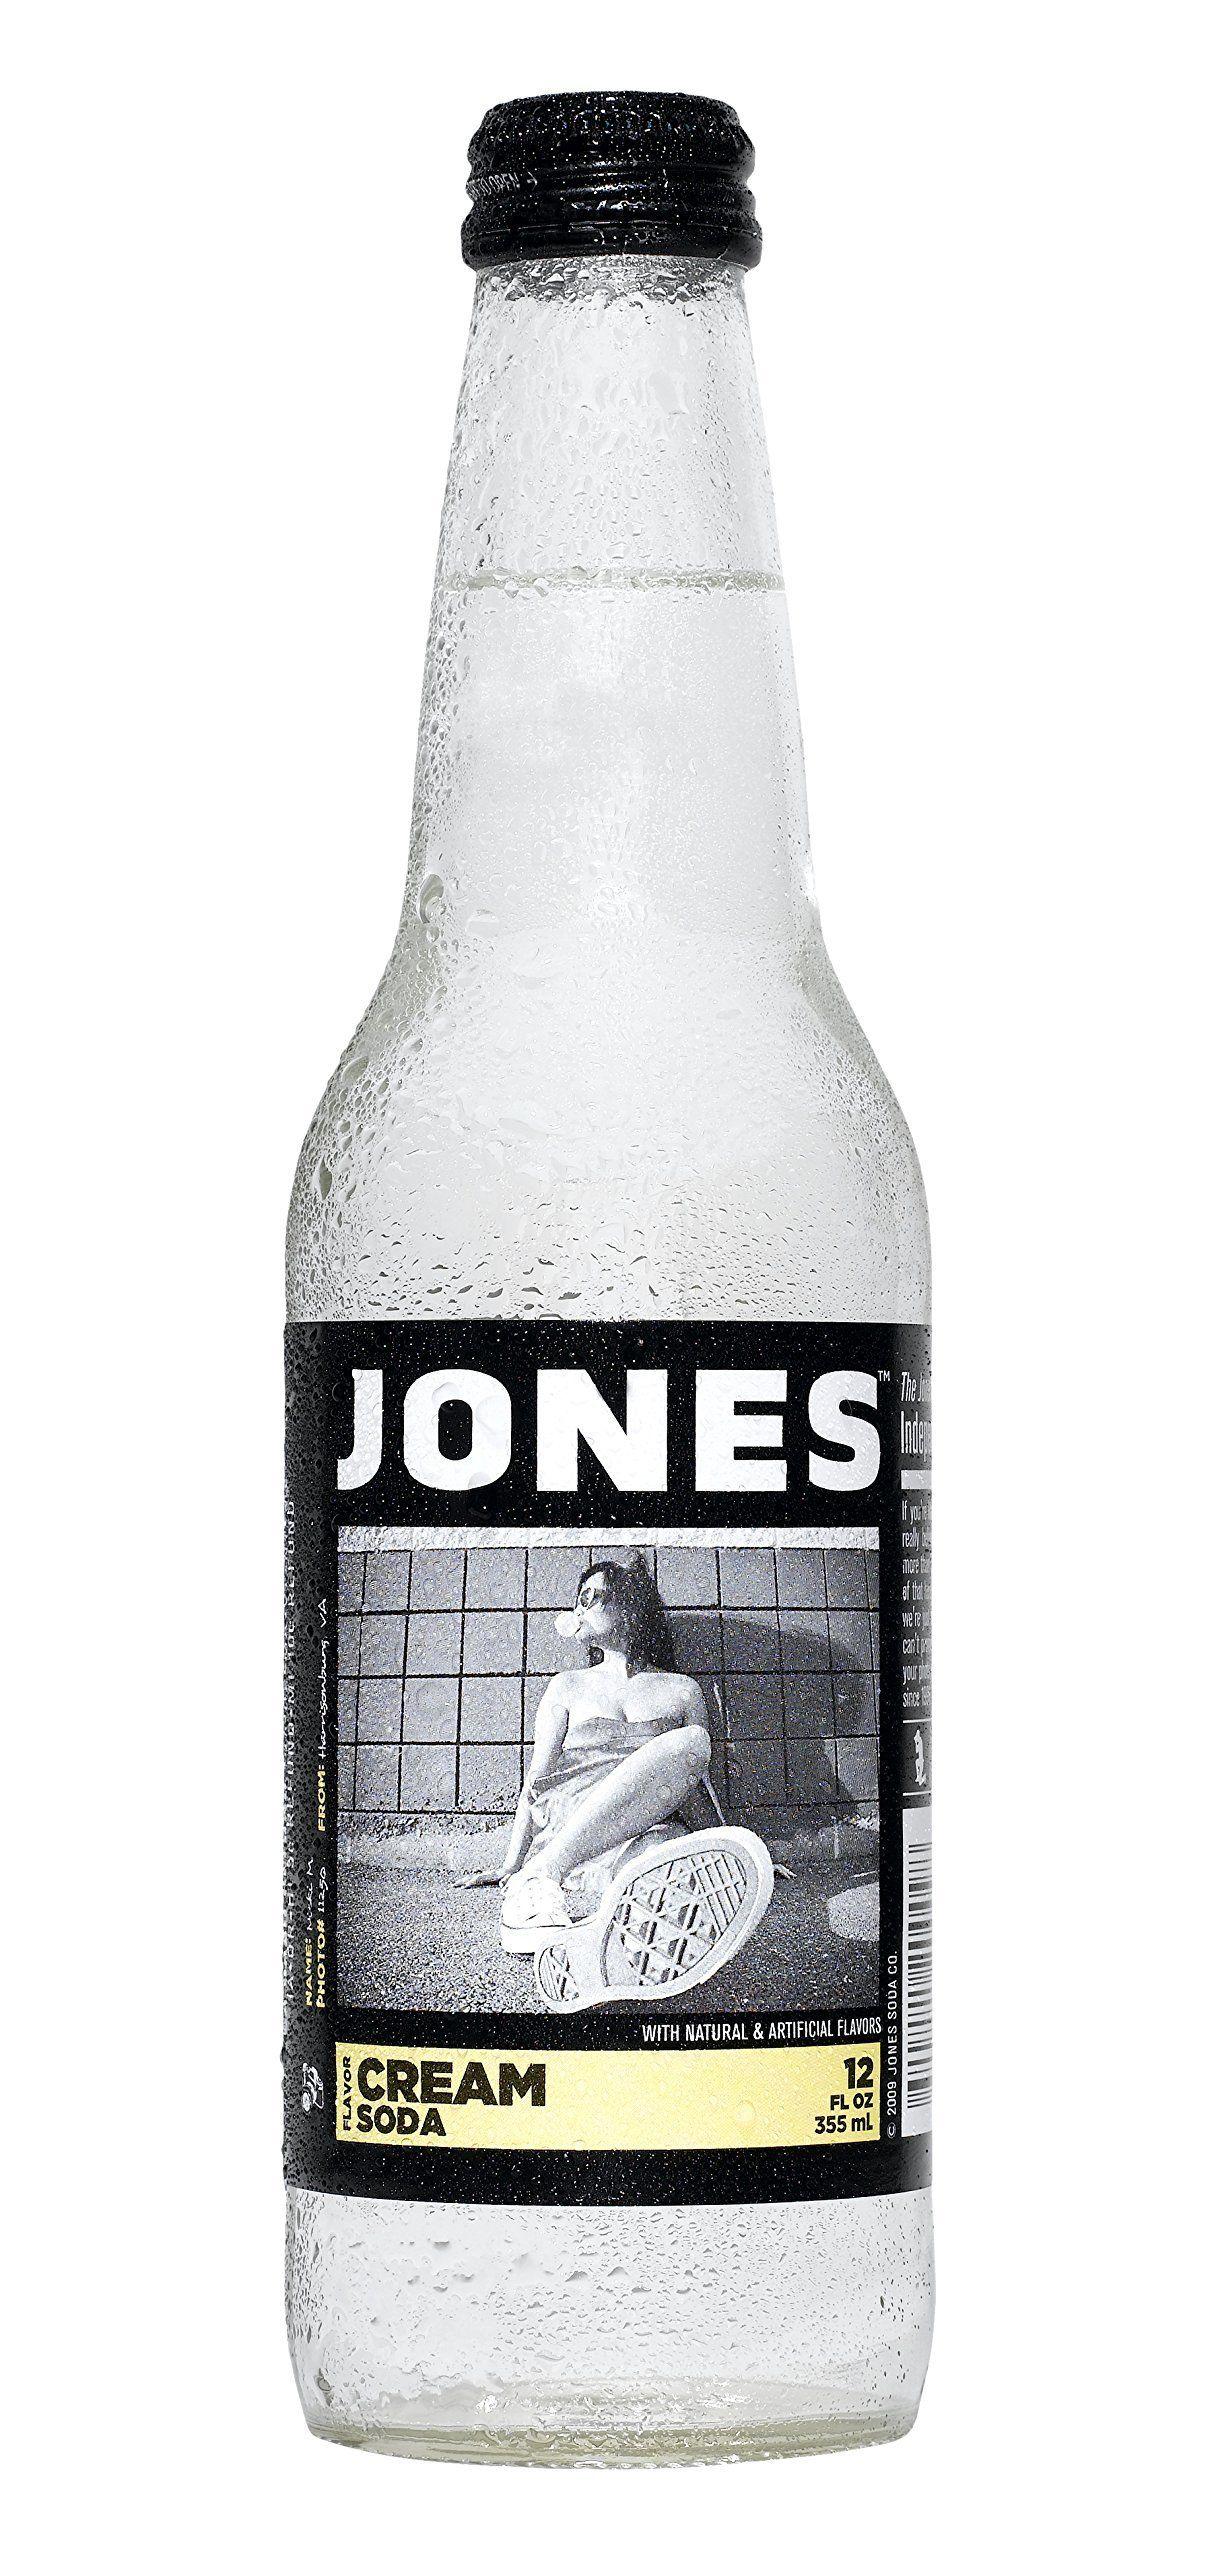 Jones Soda Logo - Amazon.com : Jones Soda 12-Pack of Jones Pure Cane Cream Soda ...